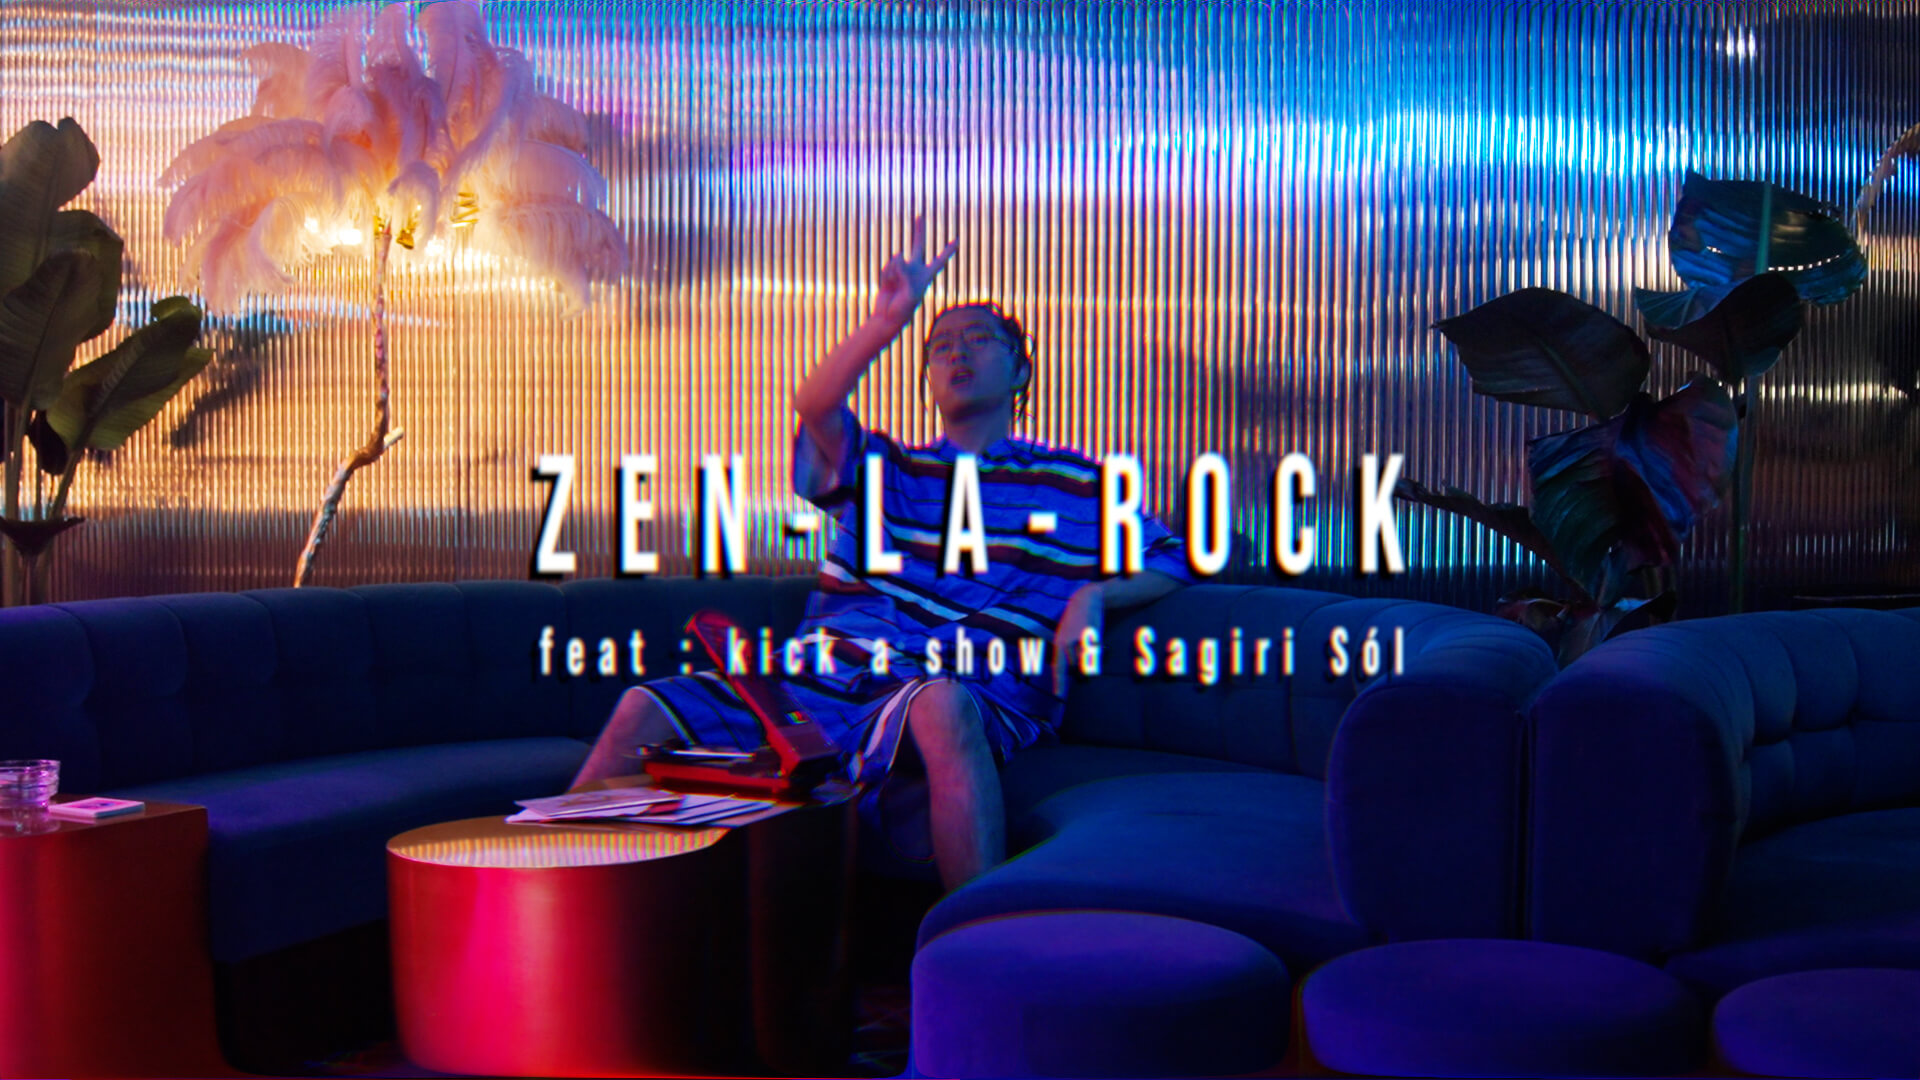 ZEN-LA-ROCK、400枚限定の7inch収録にも収録の「今夜はクラシックス」MVを公開｜grooveman Spotがプロデュース、Kick a Show、Sagiri Sól、KASHIFらも参加 music231024-zen-la-rock5